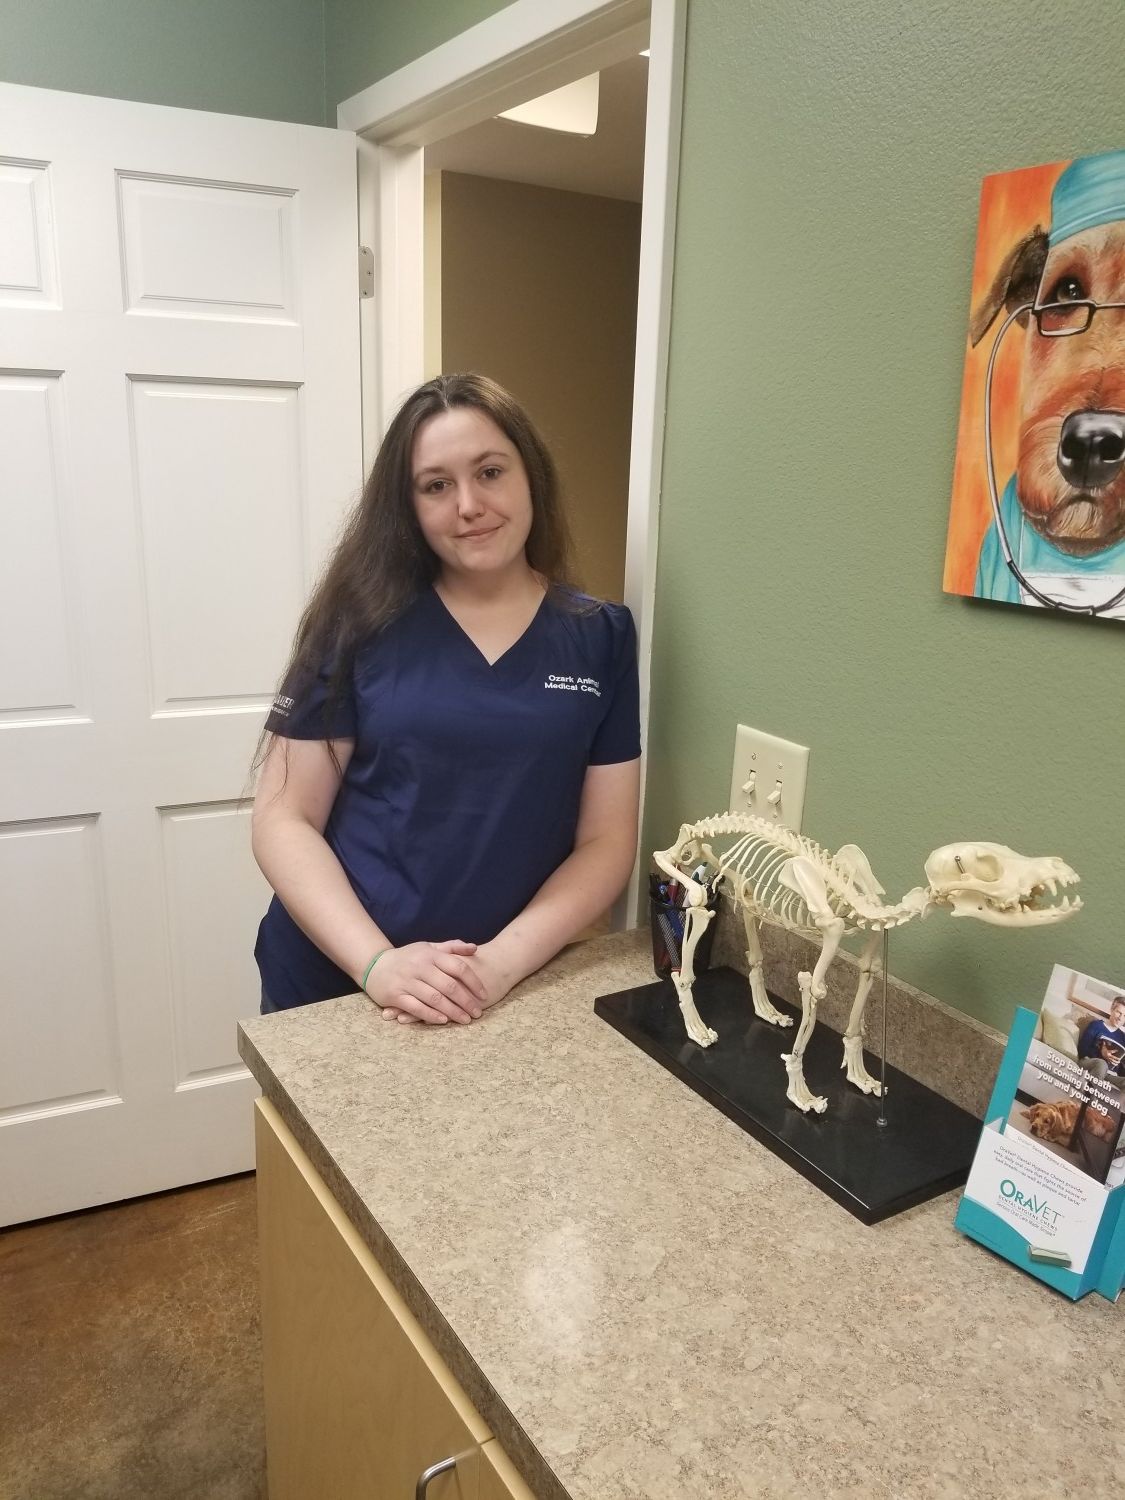 Ozark Animal Medical Center - Heber Springs, AR - Veterinary Technician - Chelsea Rogers - Bradley Self, DVM